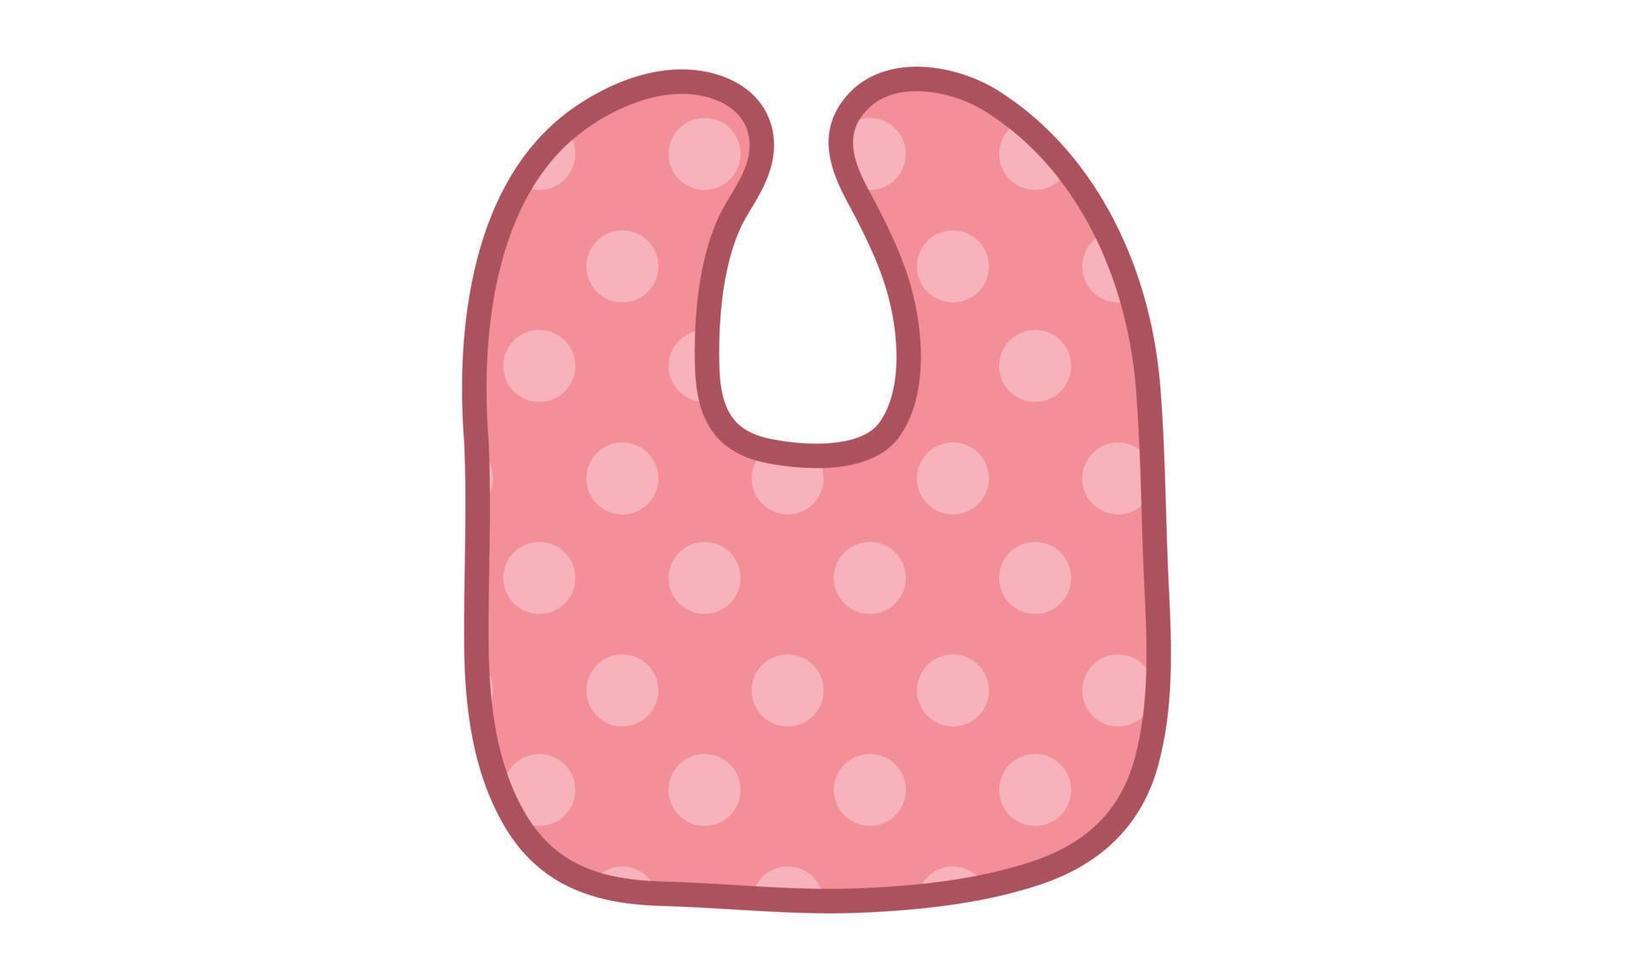 Cute baby bib clipart. Simple cute red bib for baby feeding flat vector illustration. Baby apron or bib in red polka dot pattern cartoon hand drawn. Kids, baby shower, nursery decoration